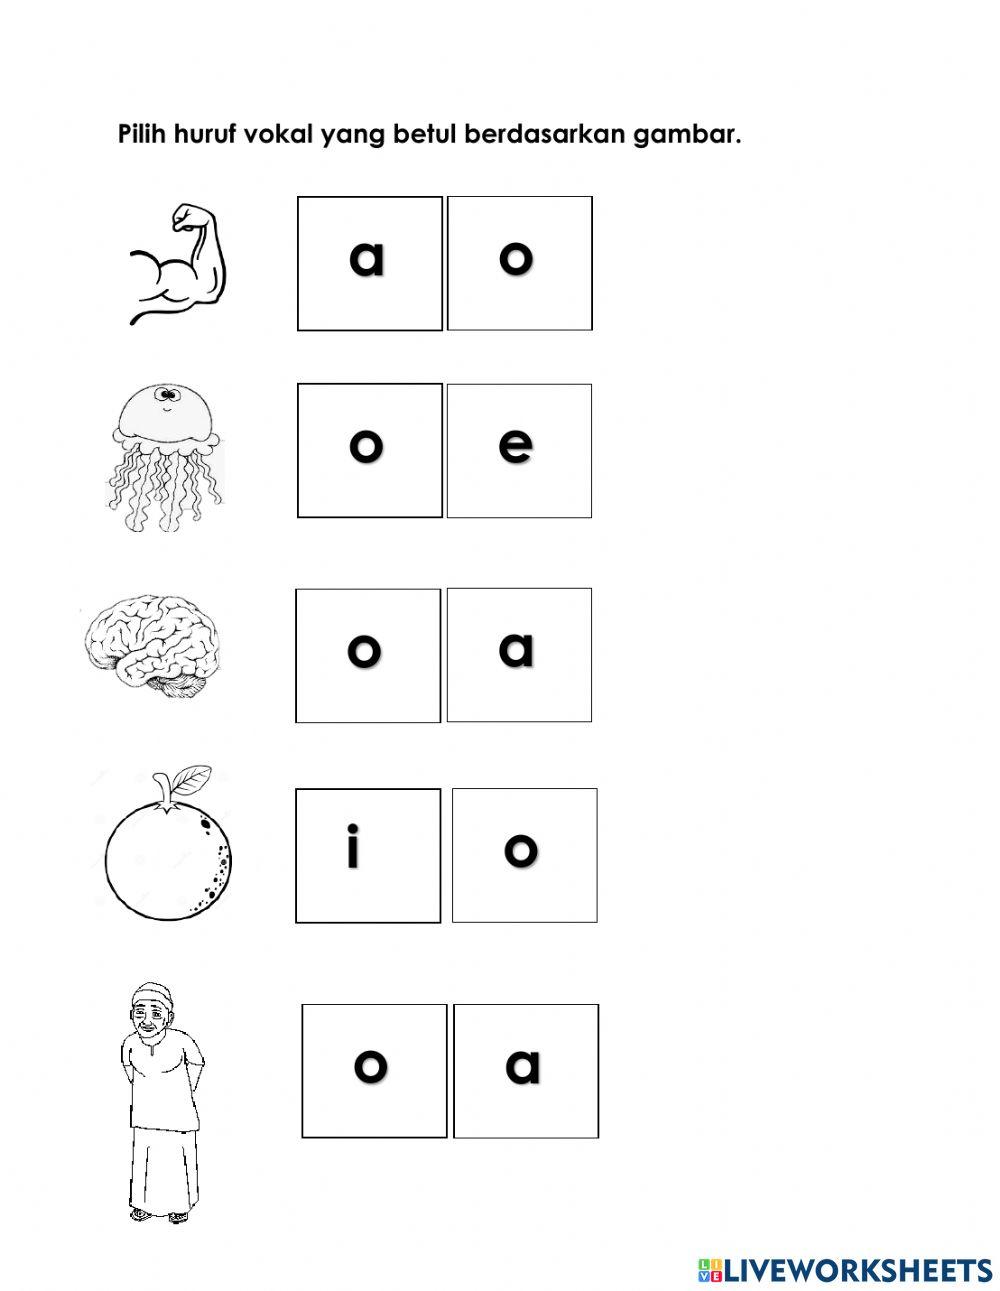 Latihan pilih huruf vokal o berdasarkan gambar